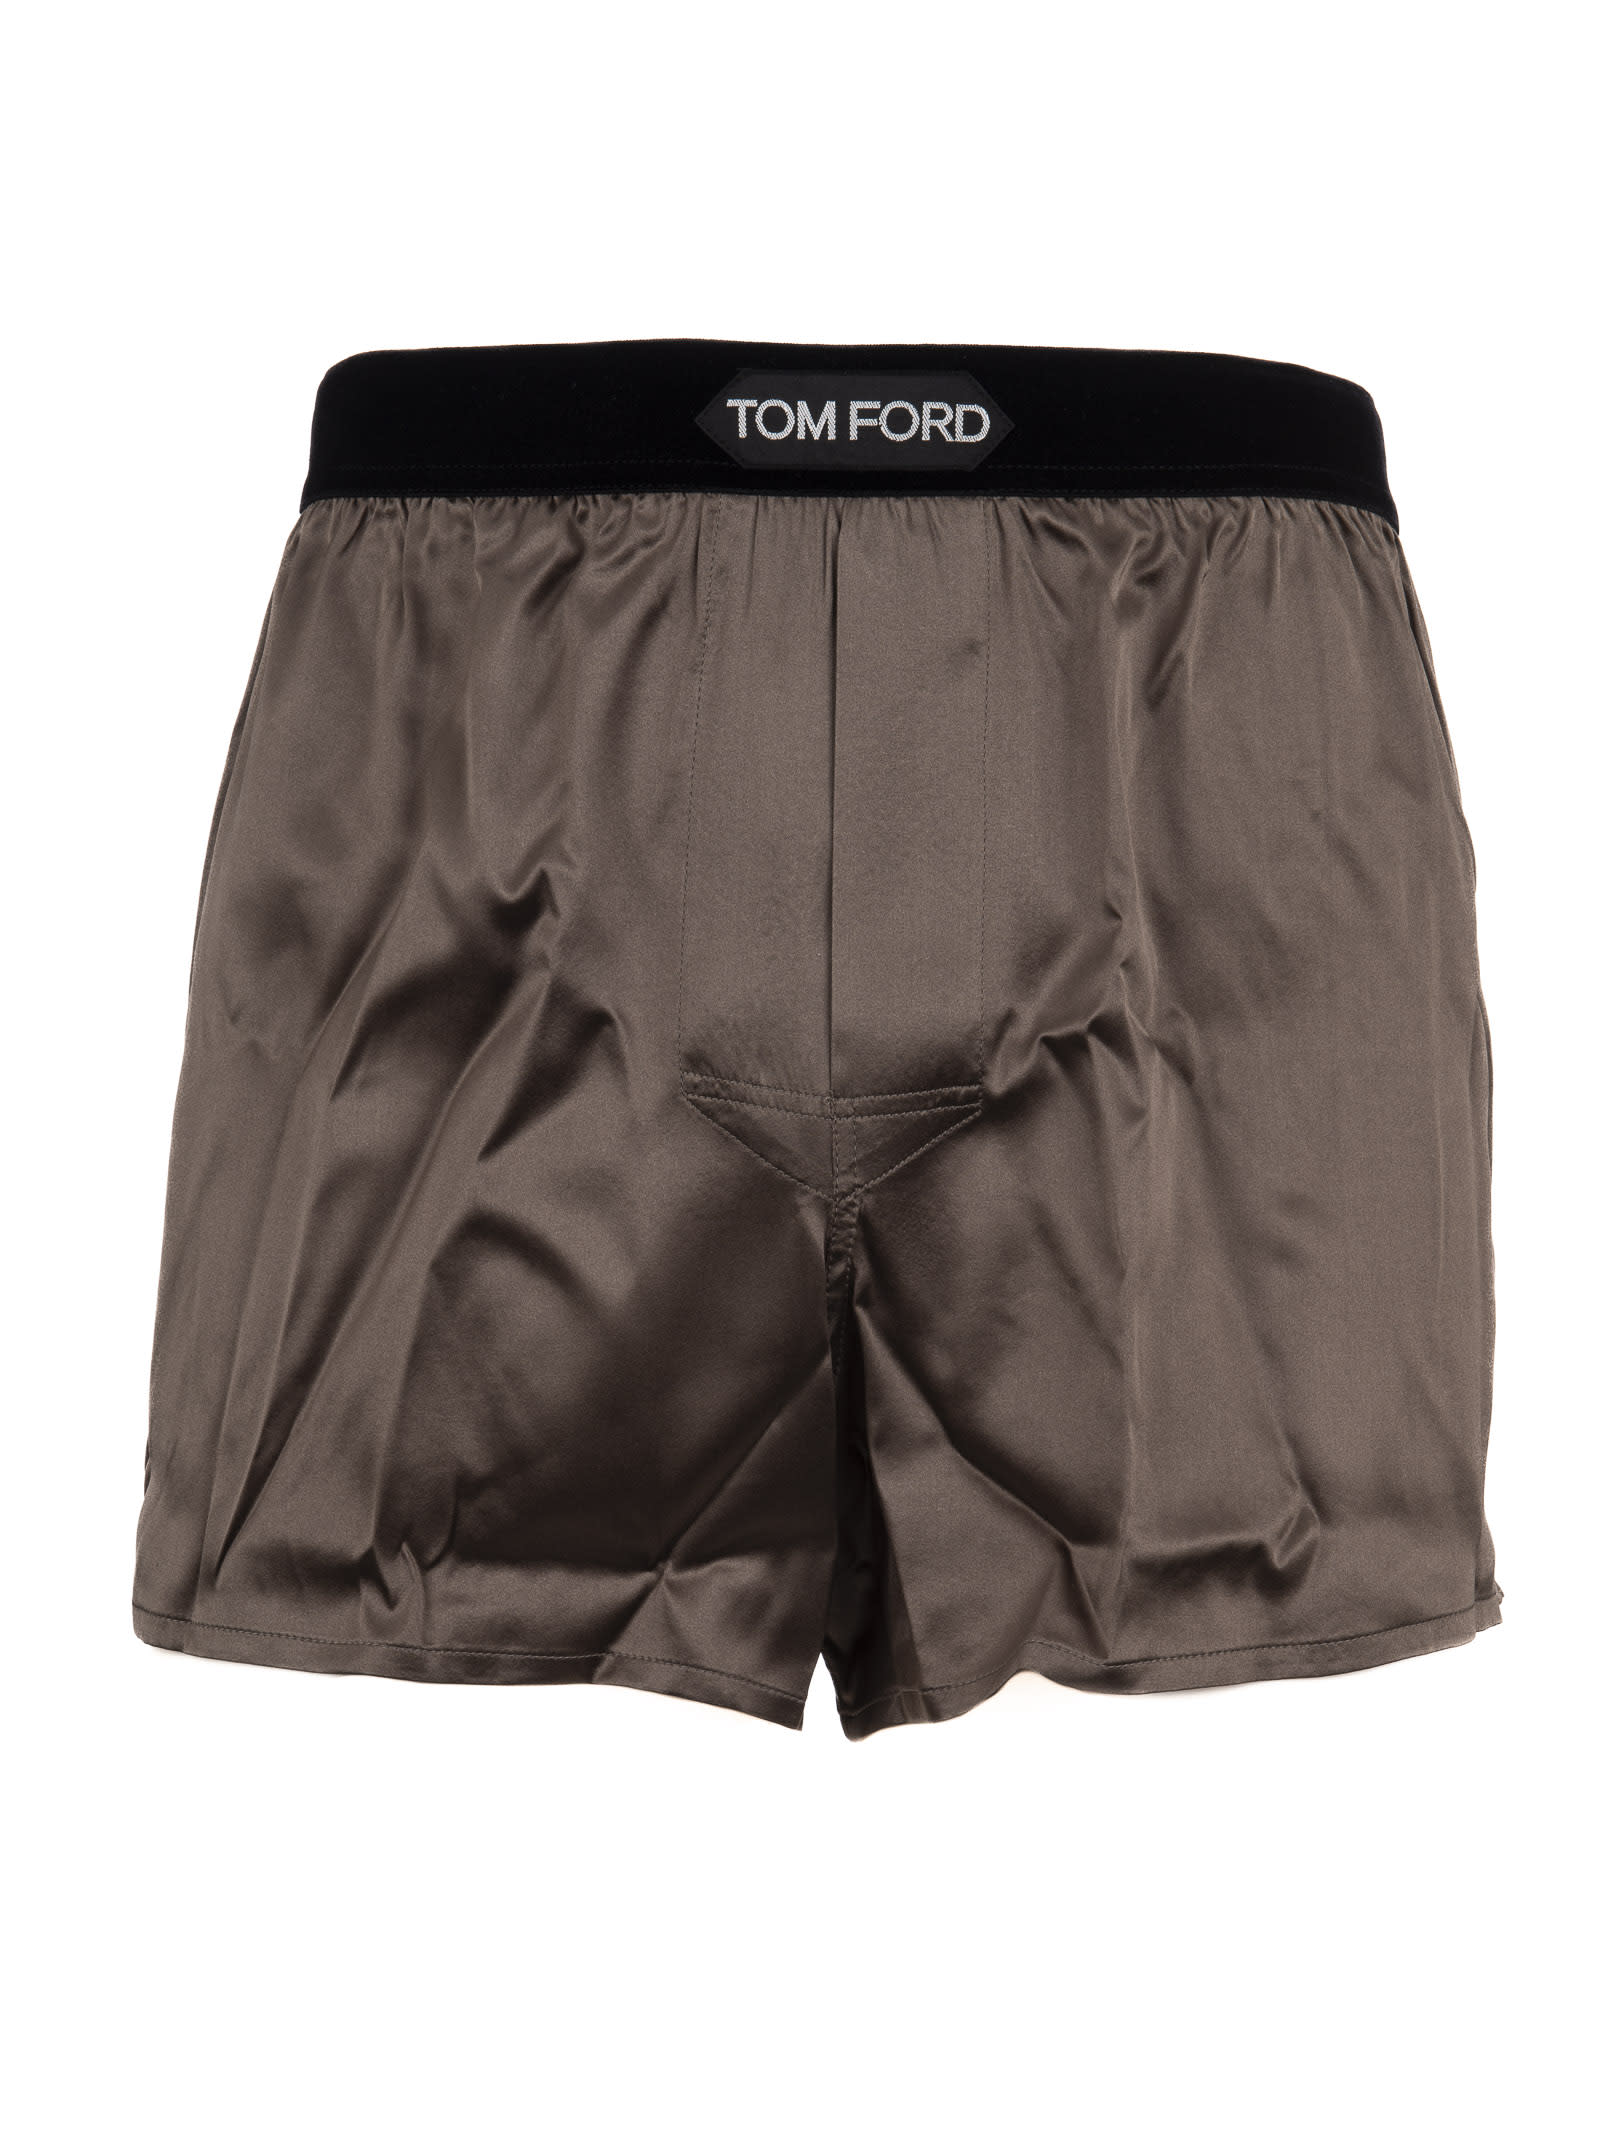 Tom Ford Logo Boxer Shorts